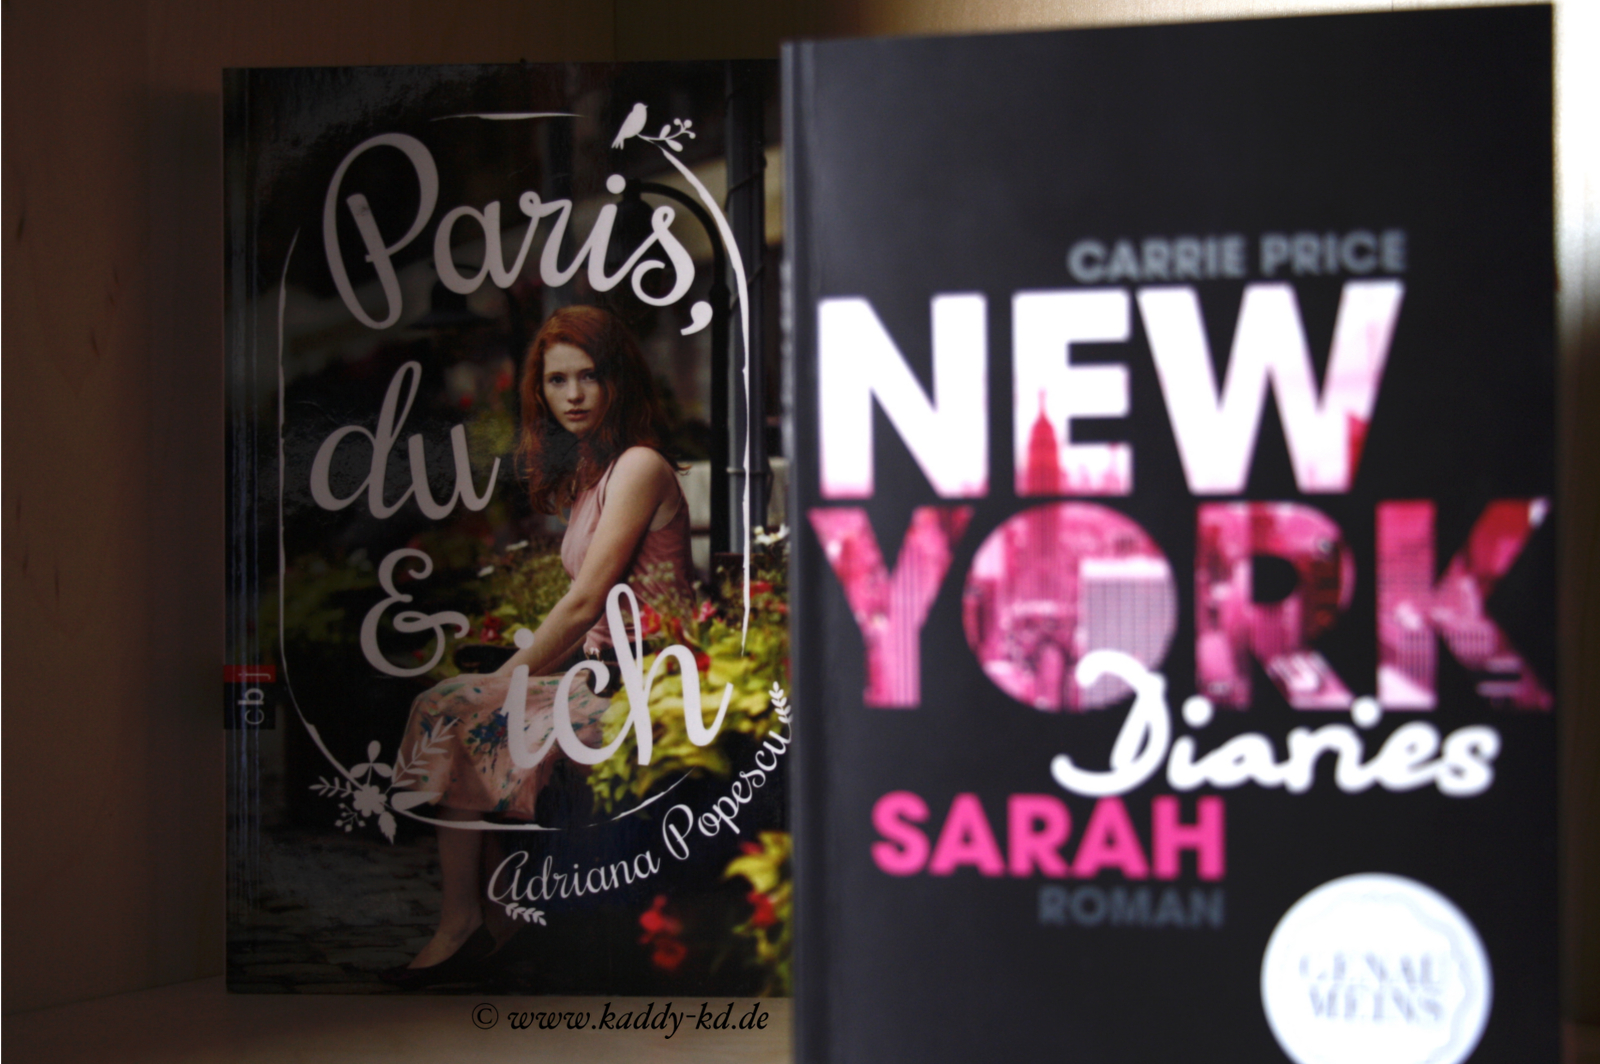 Adriana Popescu Paris, du und ich ; Carrie Price New York Diaries Sarah